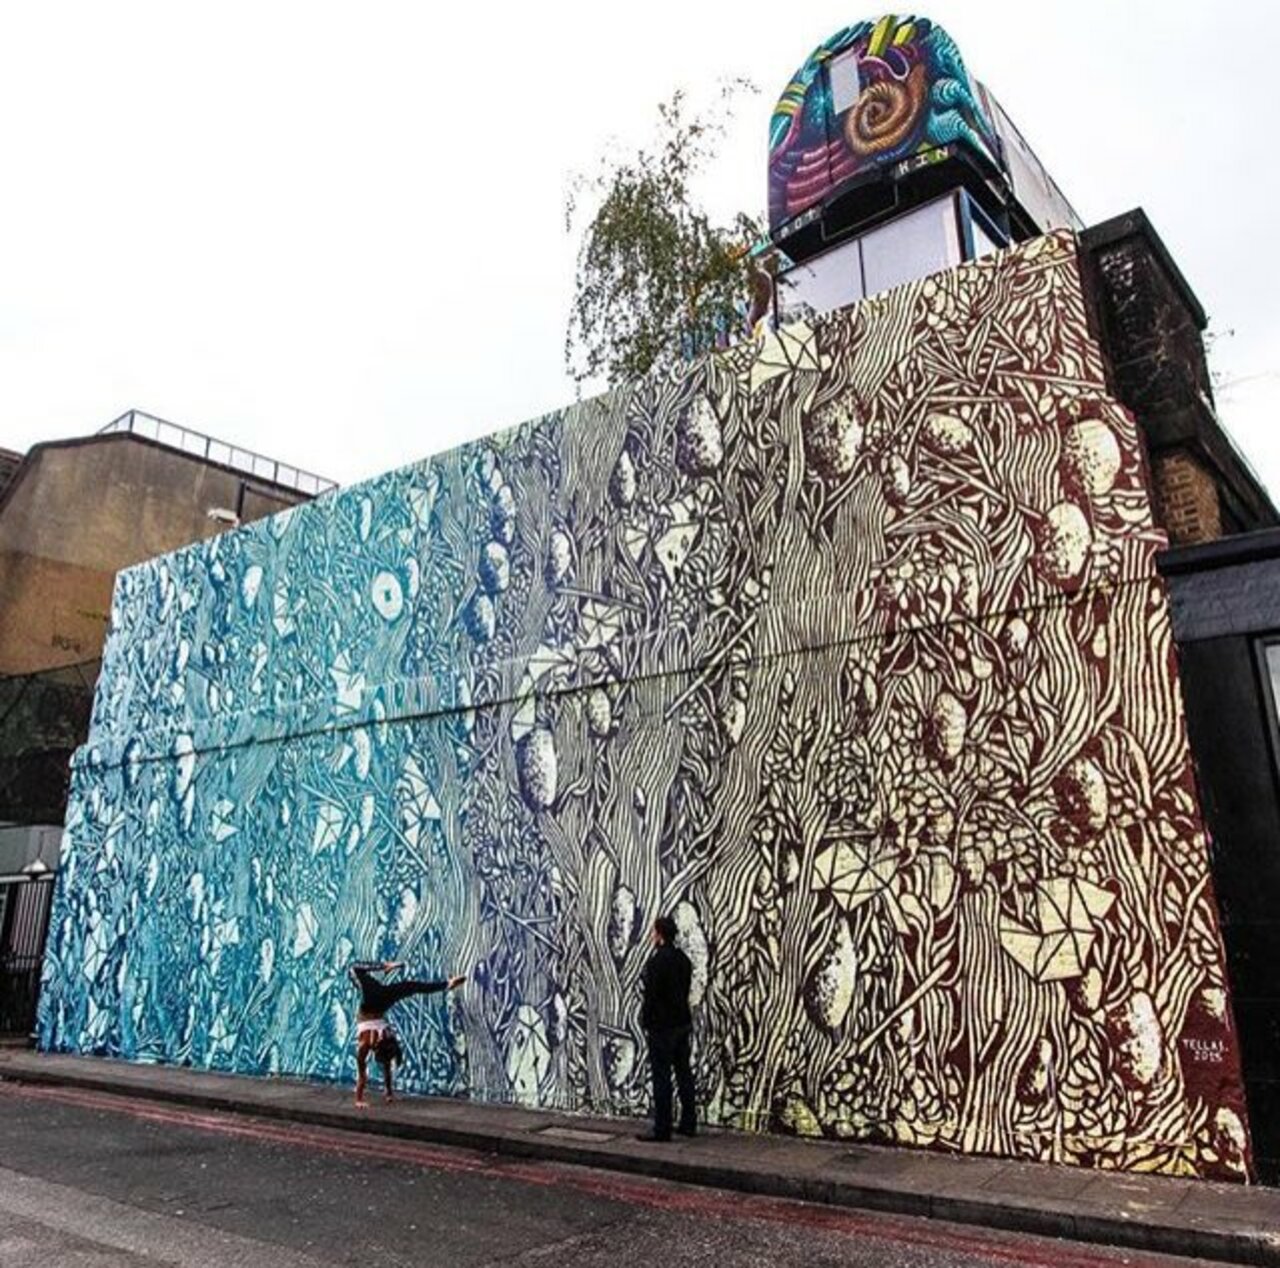 RT @GoogleStreetArt: New Street Art by Tellas in Shoreditch London 

#art #graffiti #mural #streetart https://t.co/dRdmCeG8RE